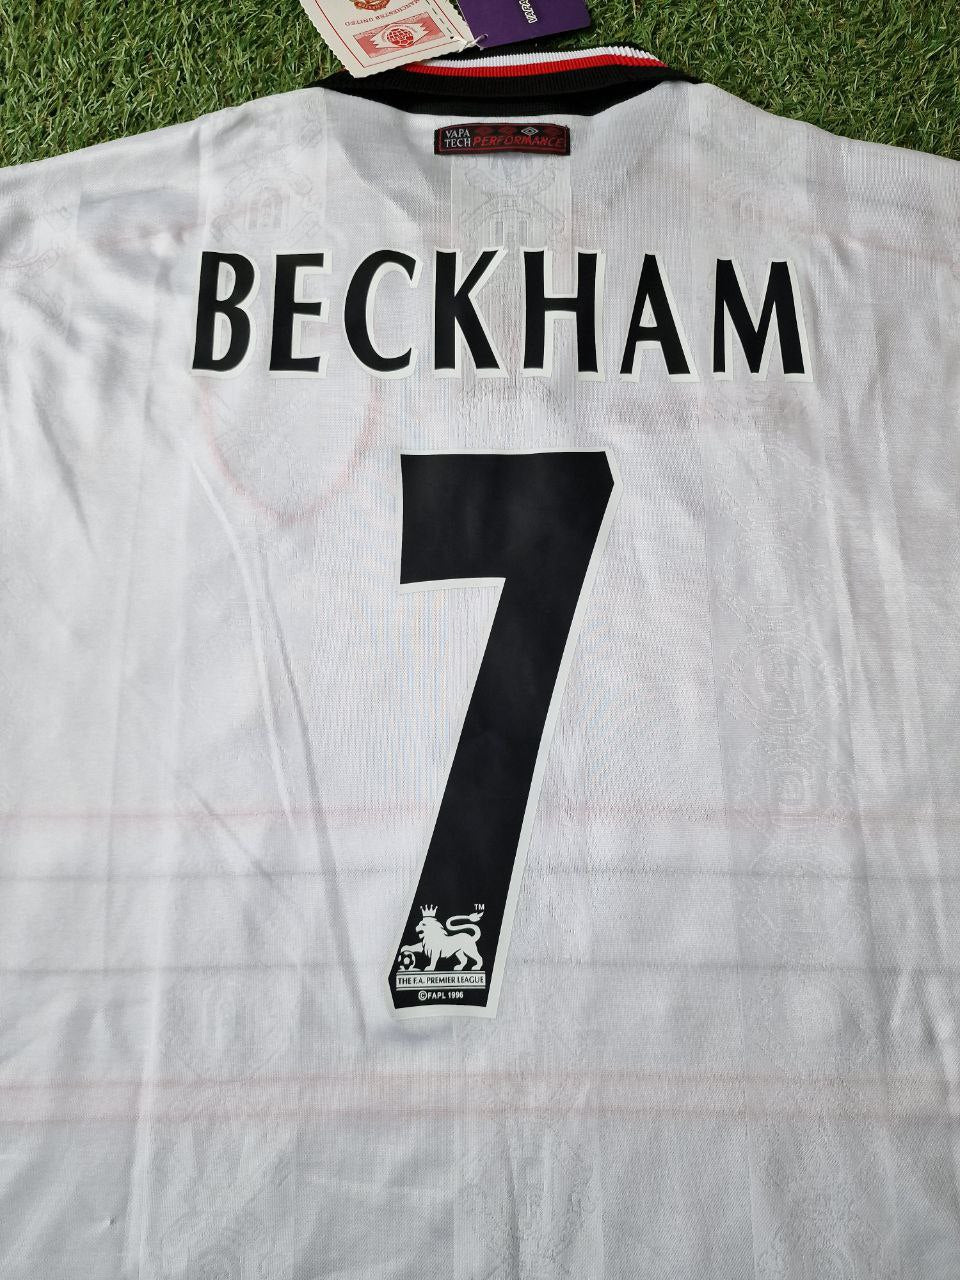 David Beckham Manchester United White Retro Football Jersey